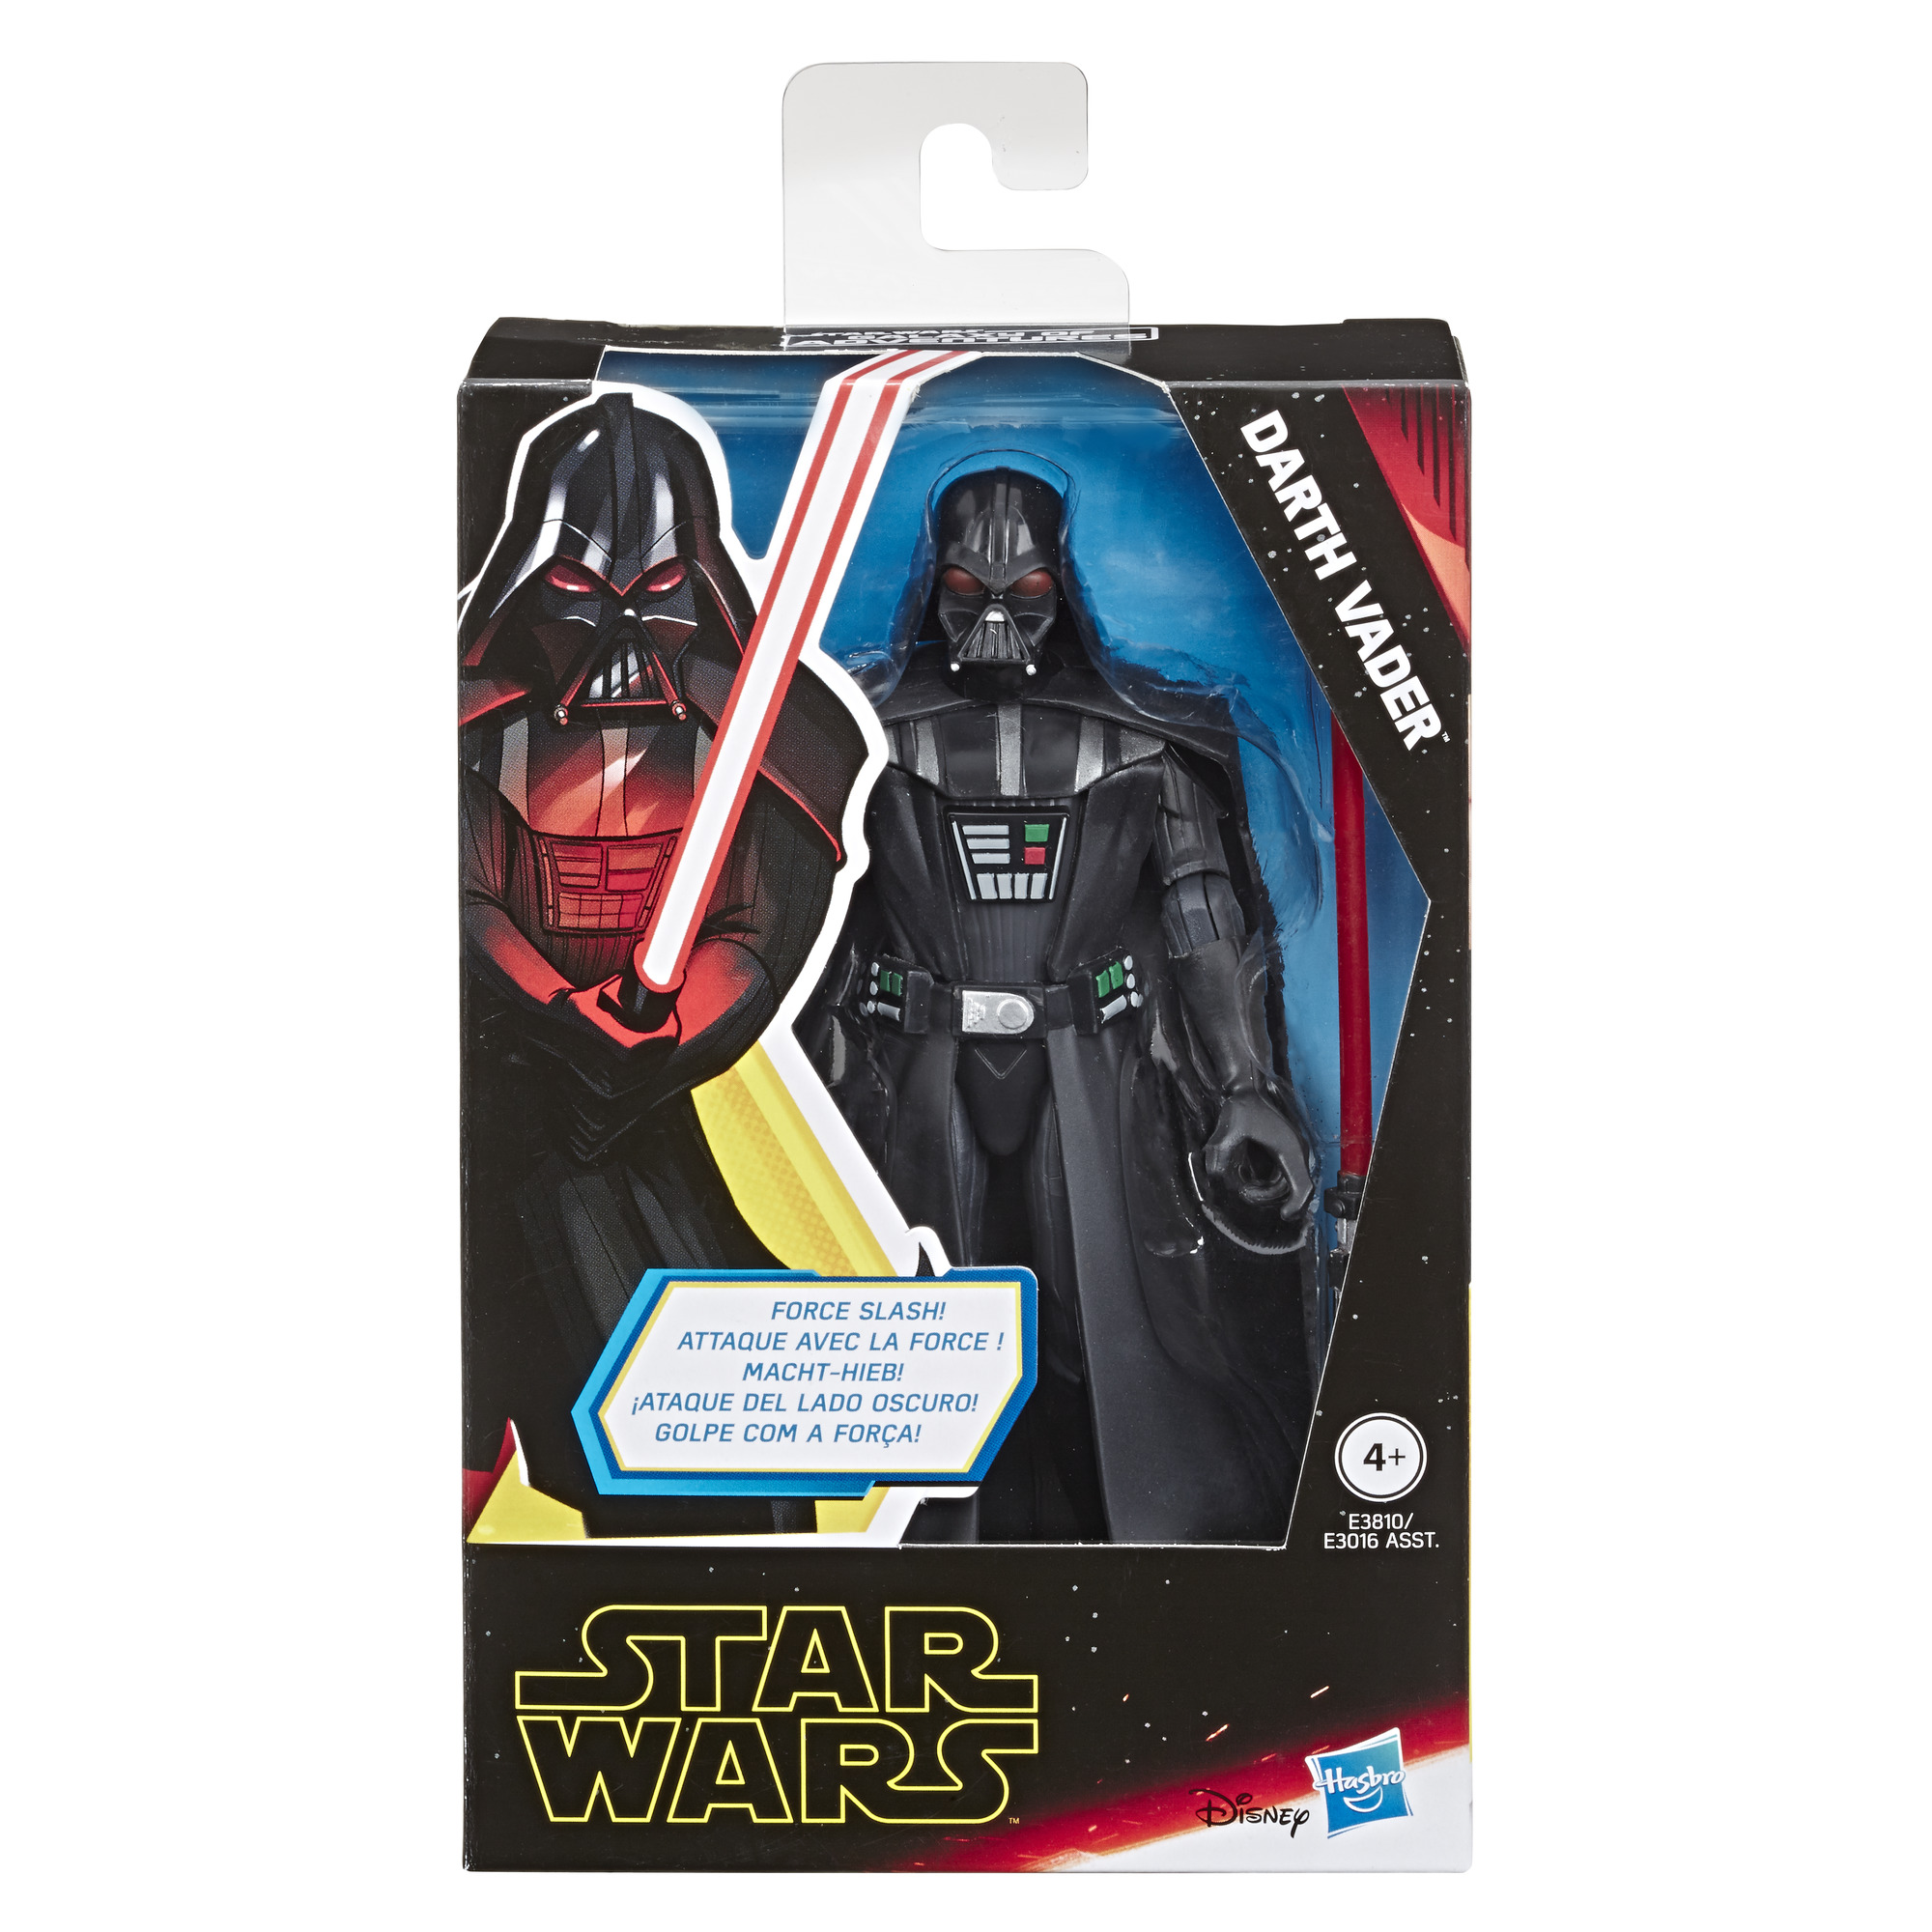 SWGOA Darth Vader Figure 1